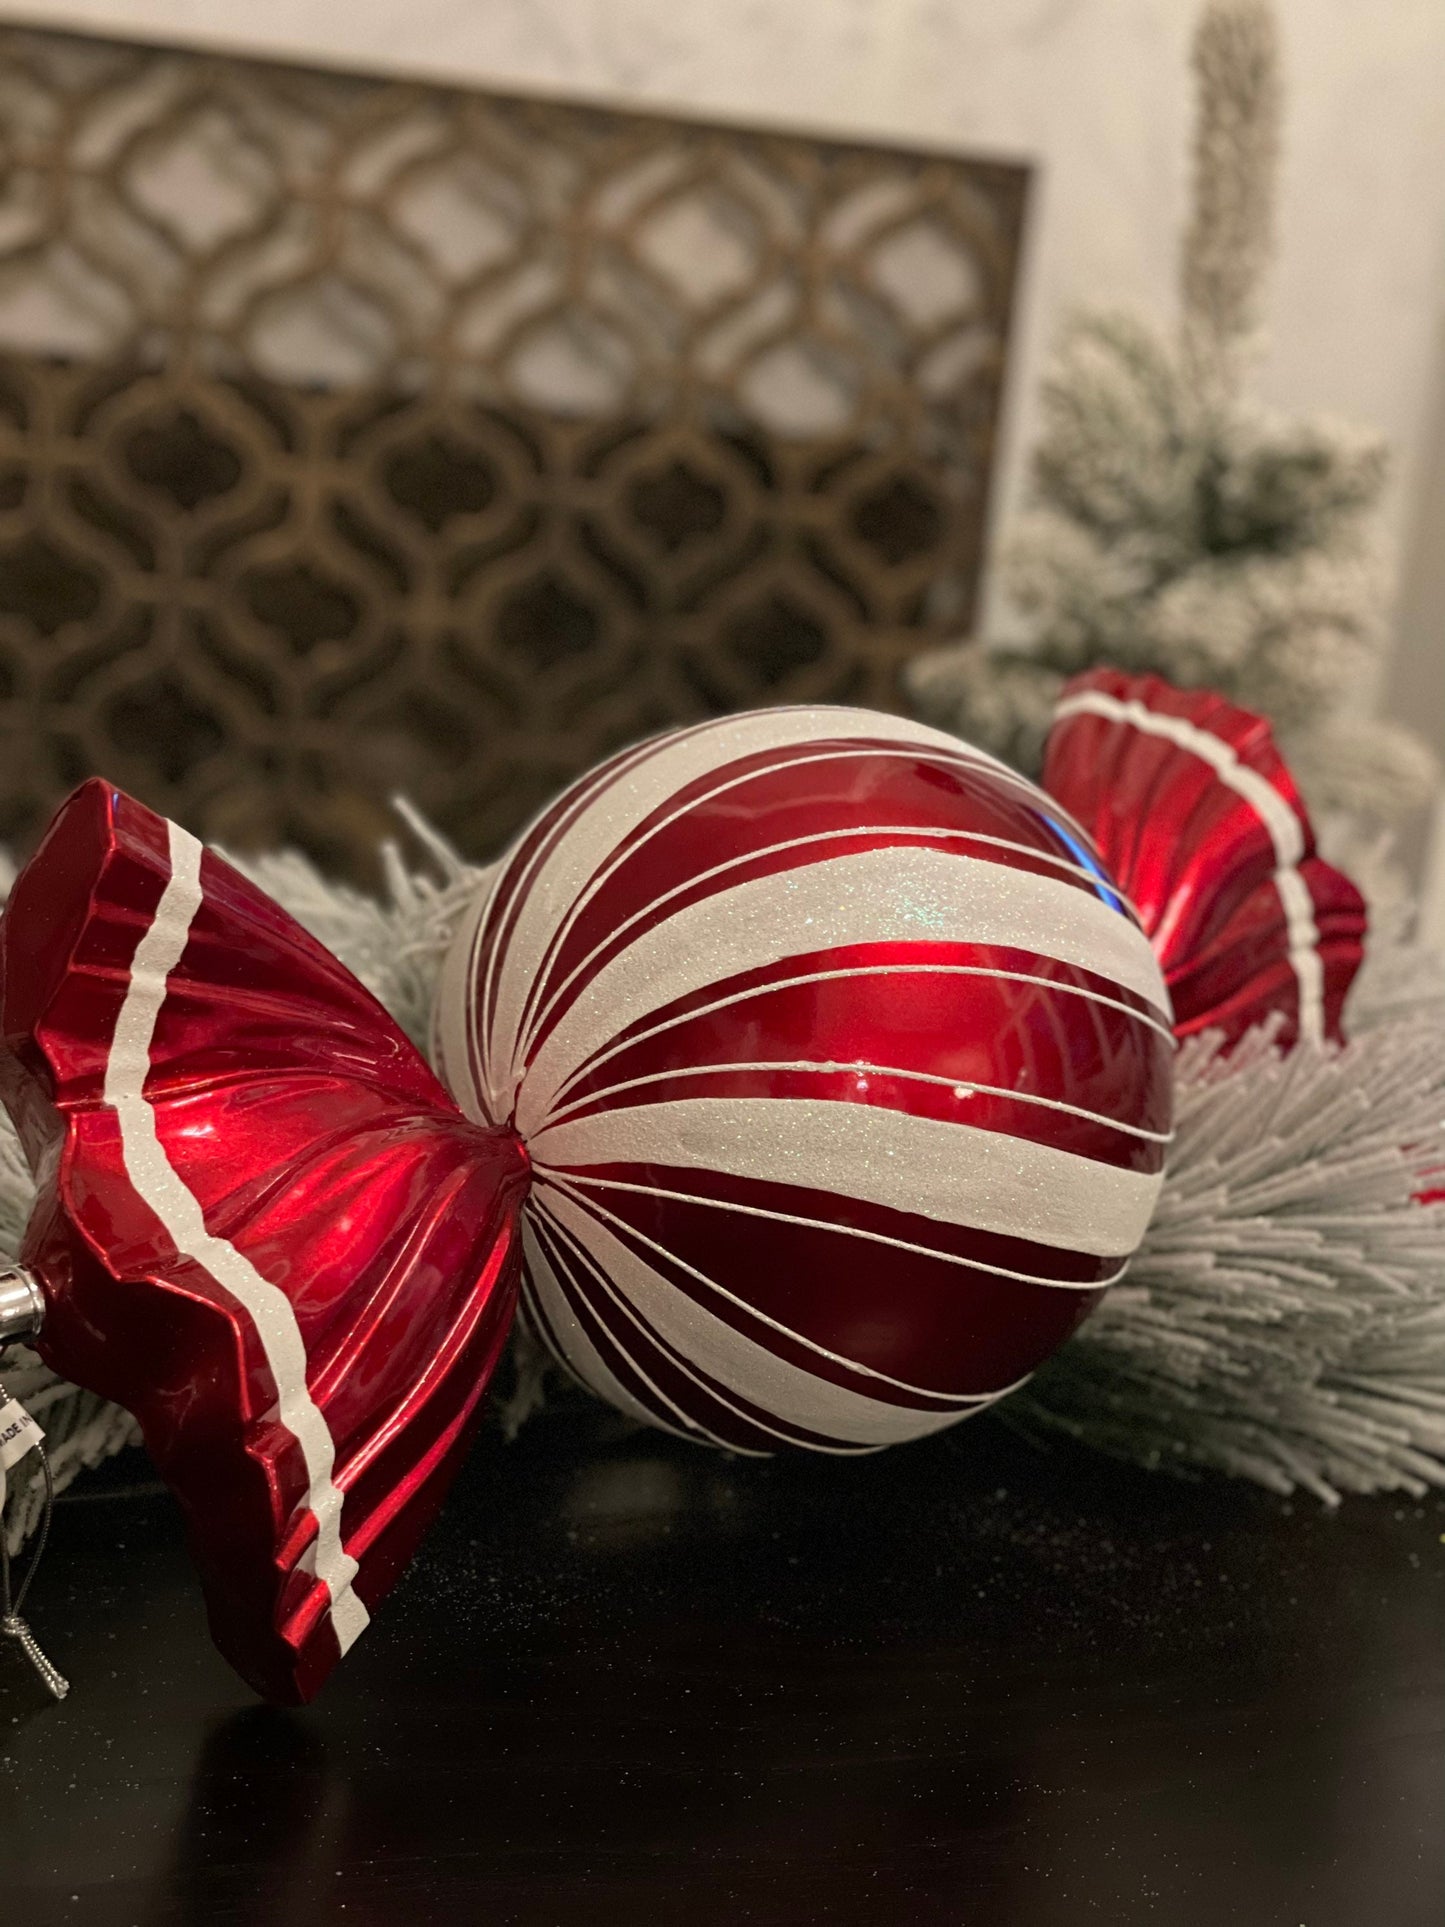 18.5” vp peppermint candy round twist ornament. Shatterproof. Plastic.